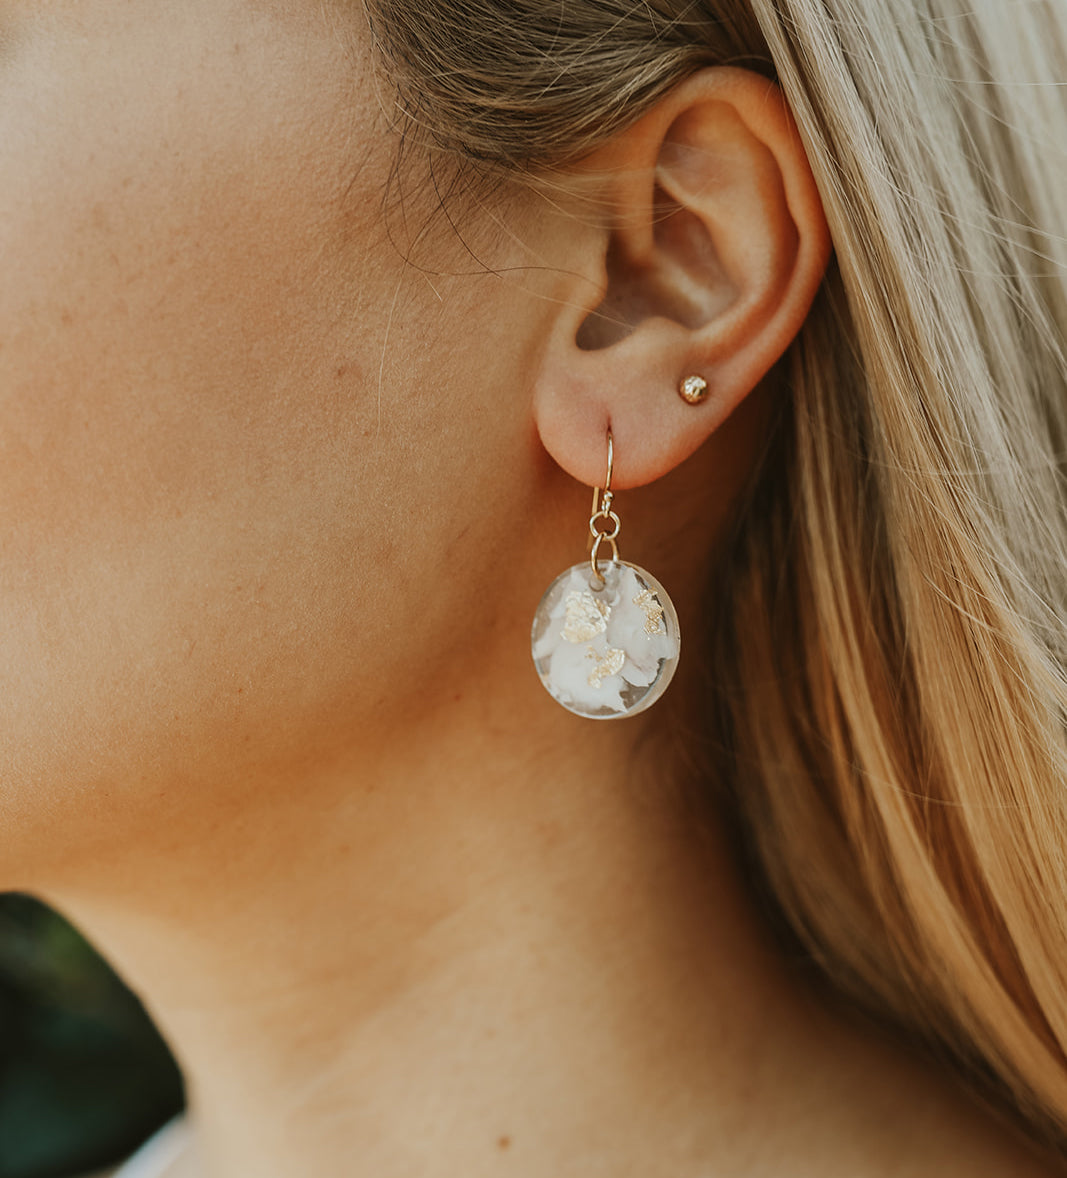 French Hook Earrings - White Shells